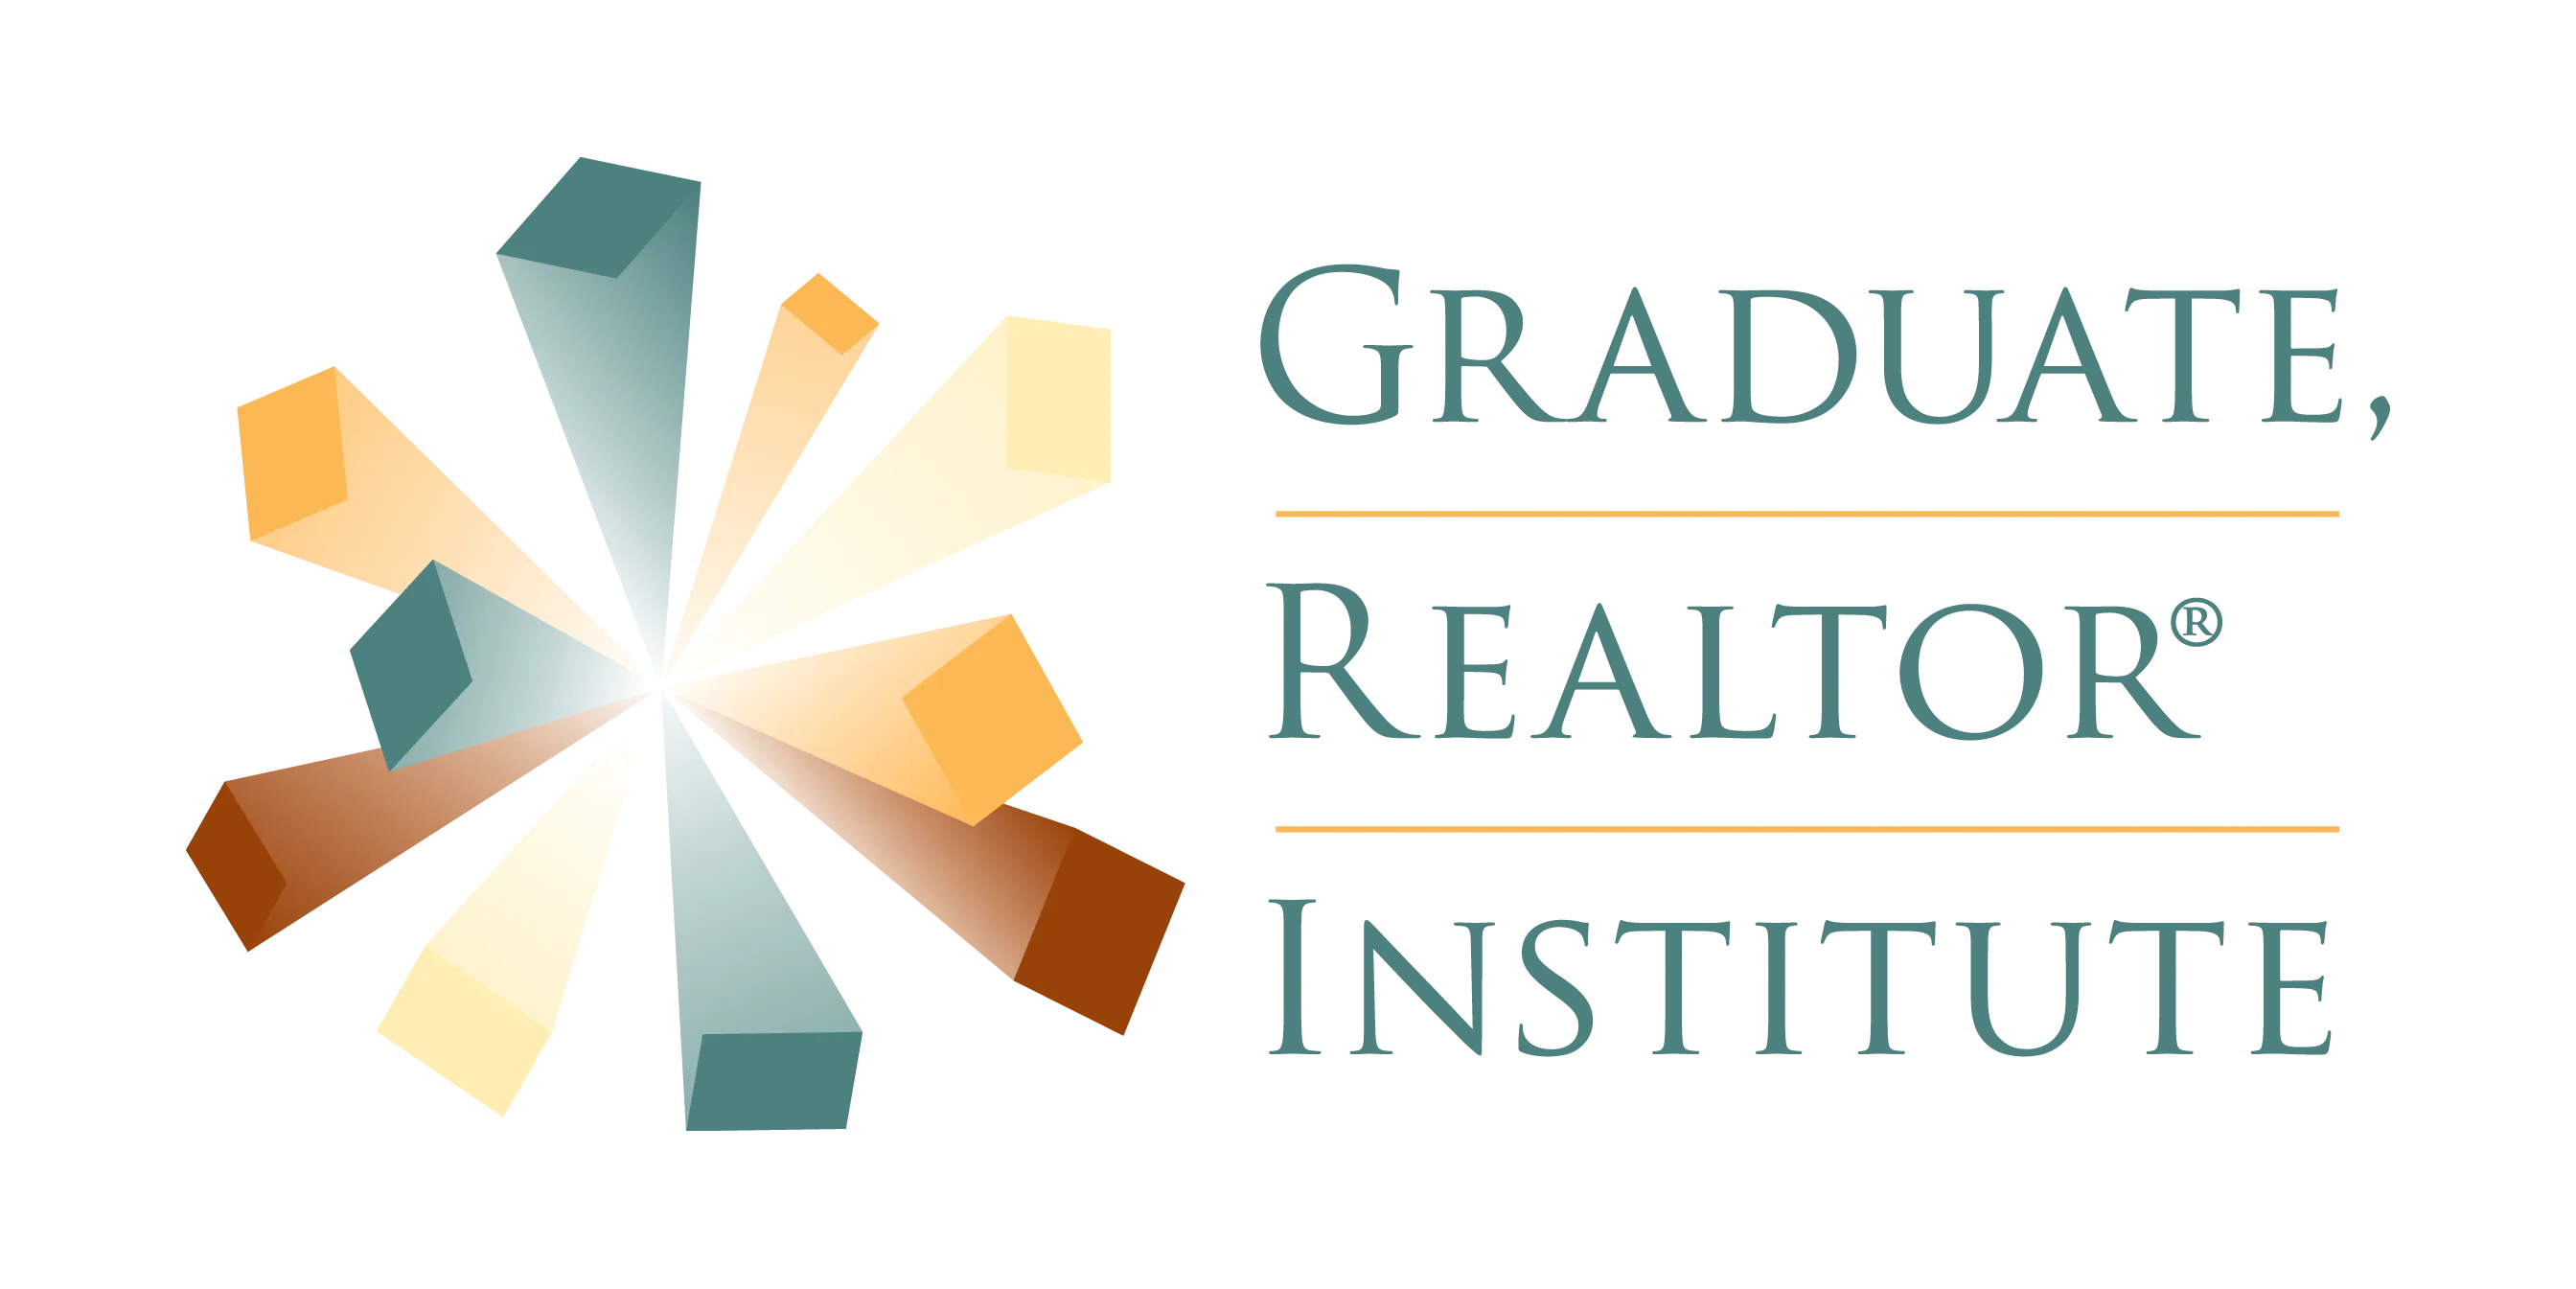 graduate-realtor-institute-logo-color-transparent-background-02-01-2021-2688w-1345h